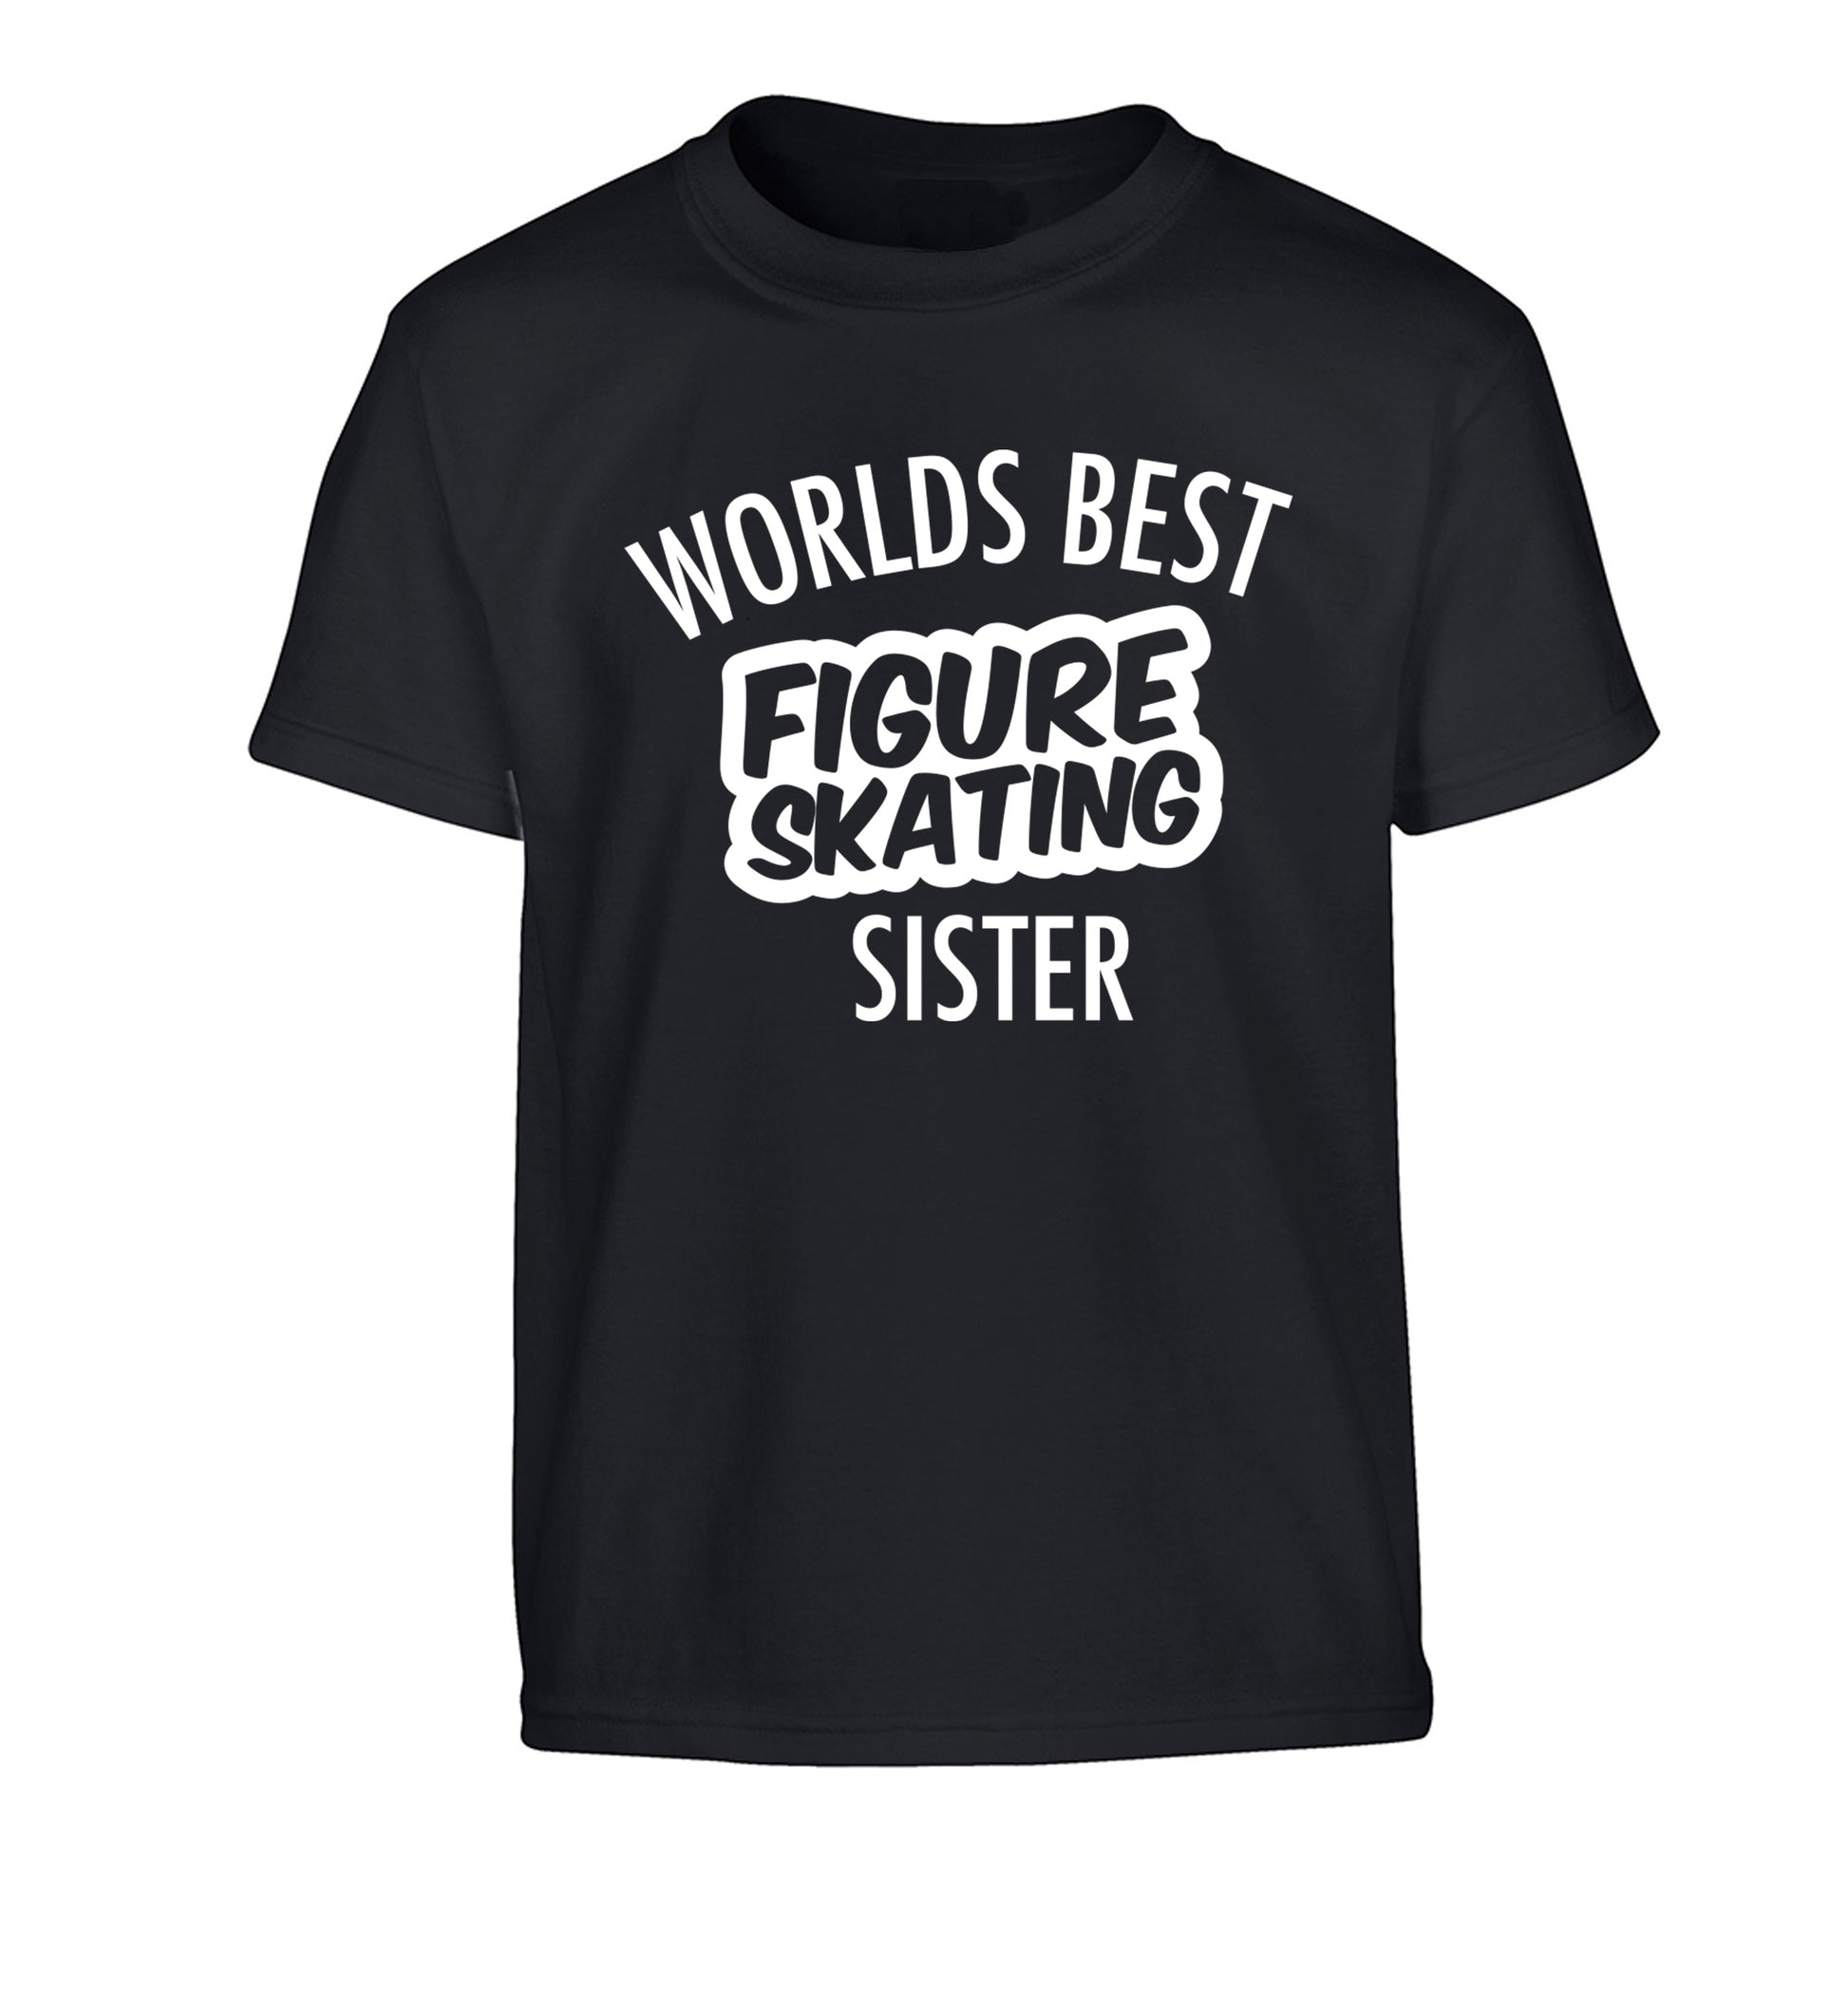 Worlds best figure skating sisterChildren's black Tshirt 12-14 Years